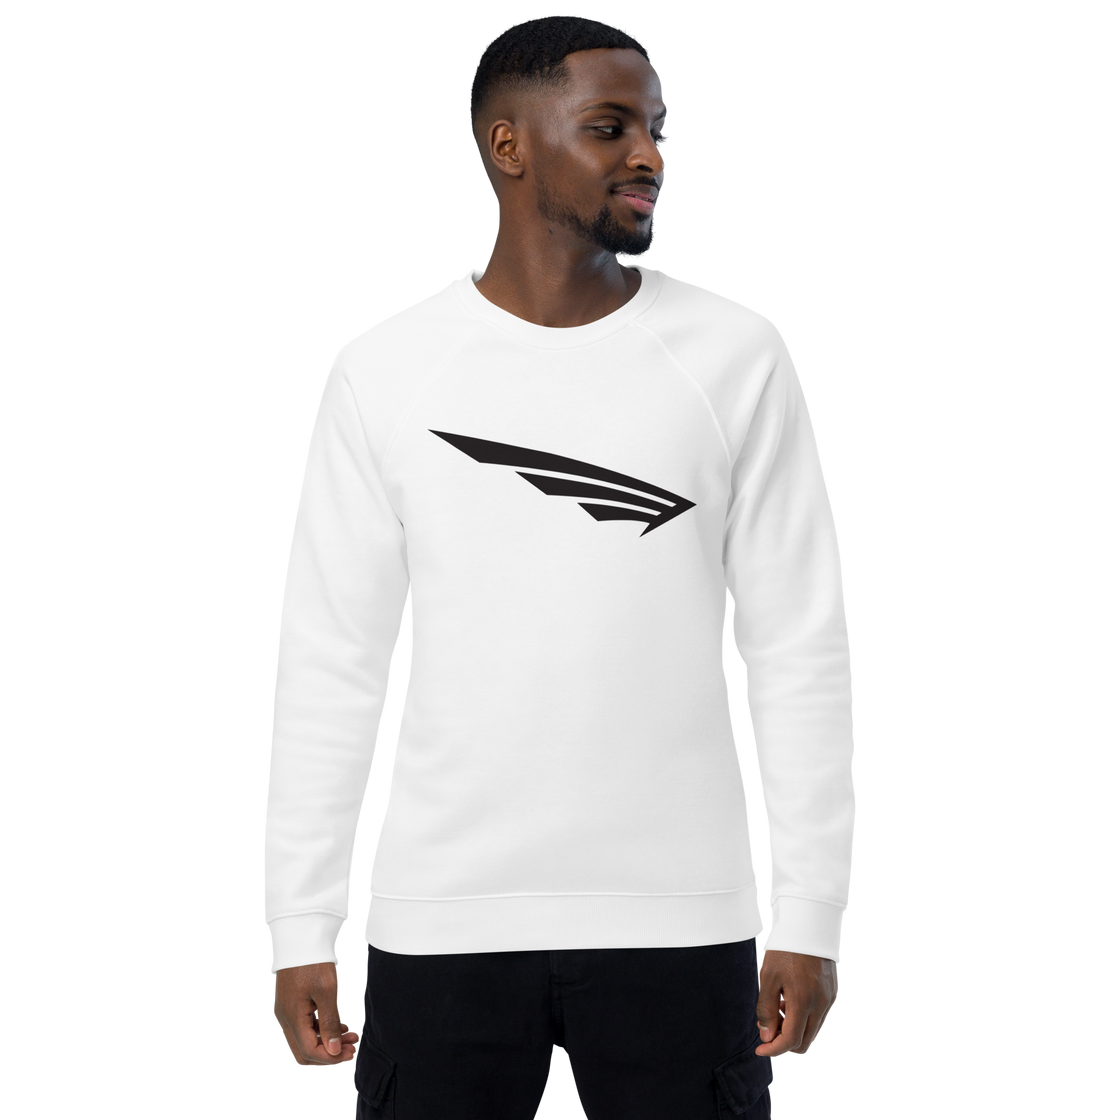 FLY³ Archangel raglan sweatshirt | Flycube